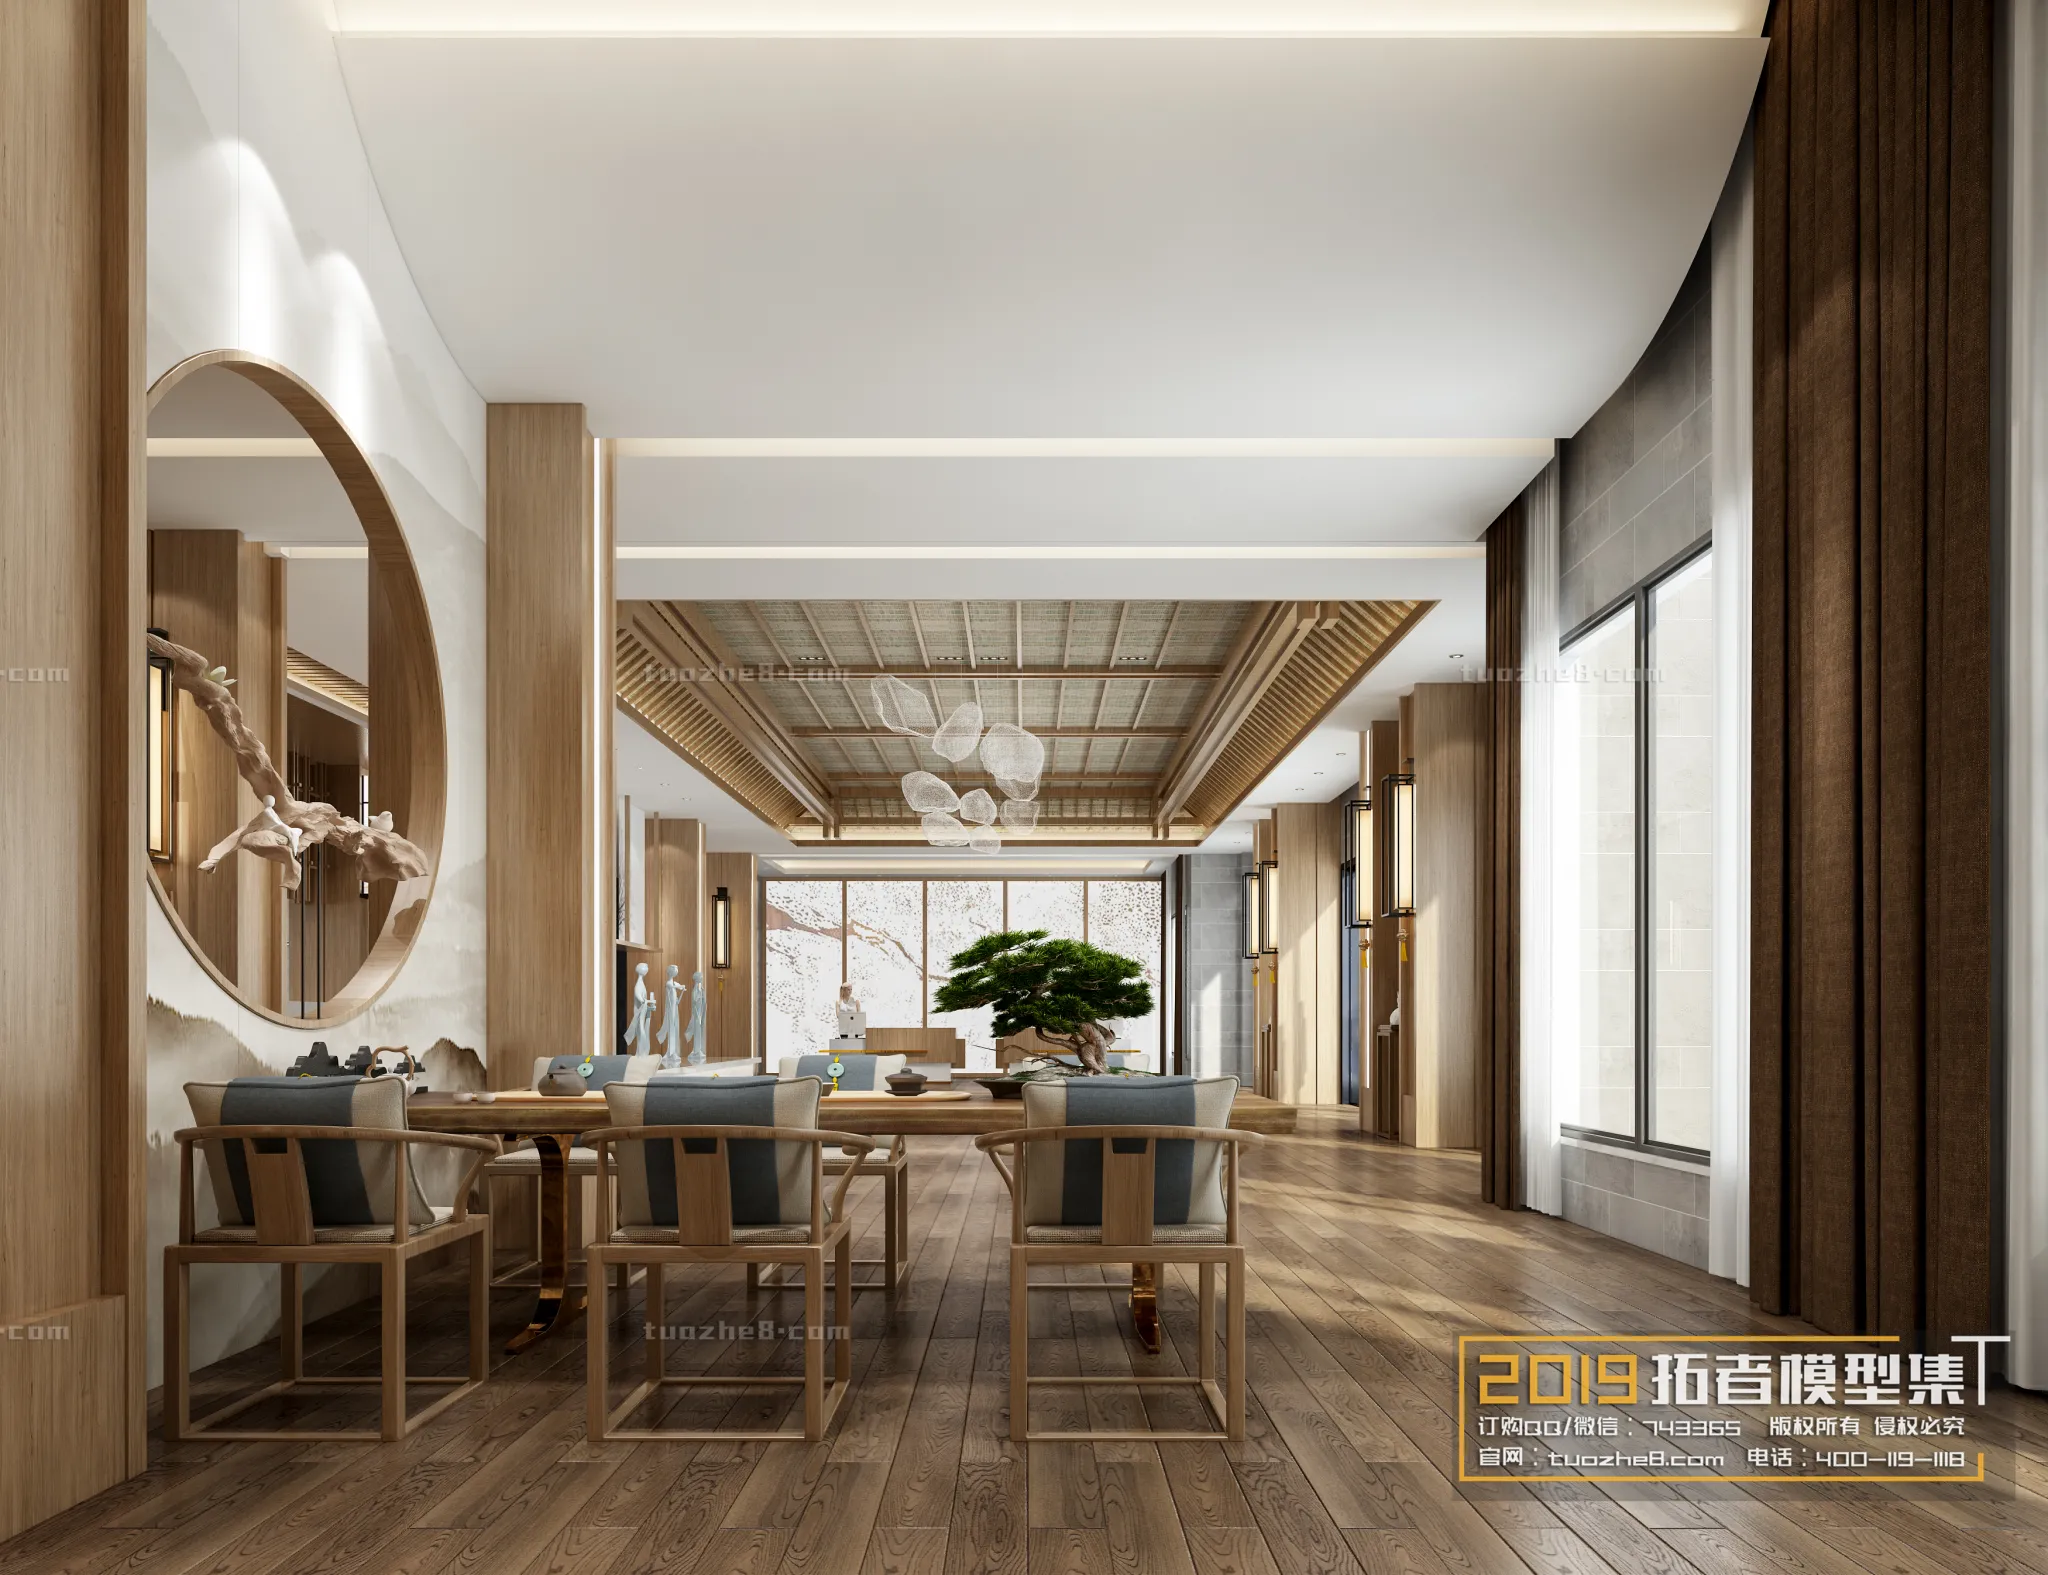 Extension Interior – TEA HOUSE ART – 002